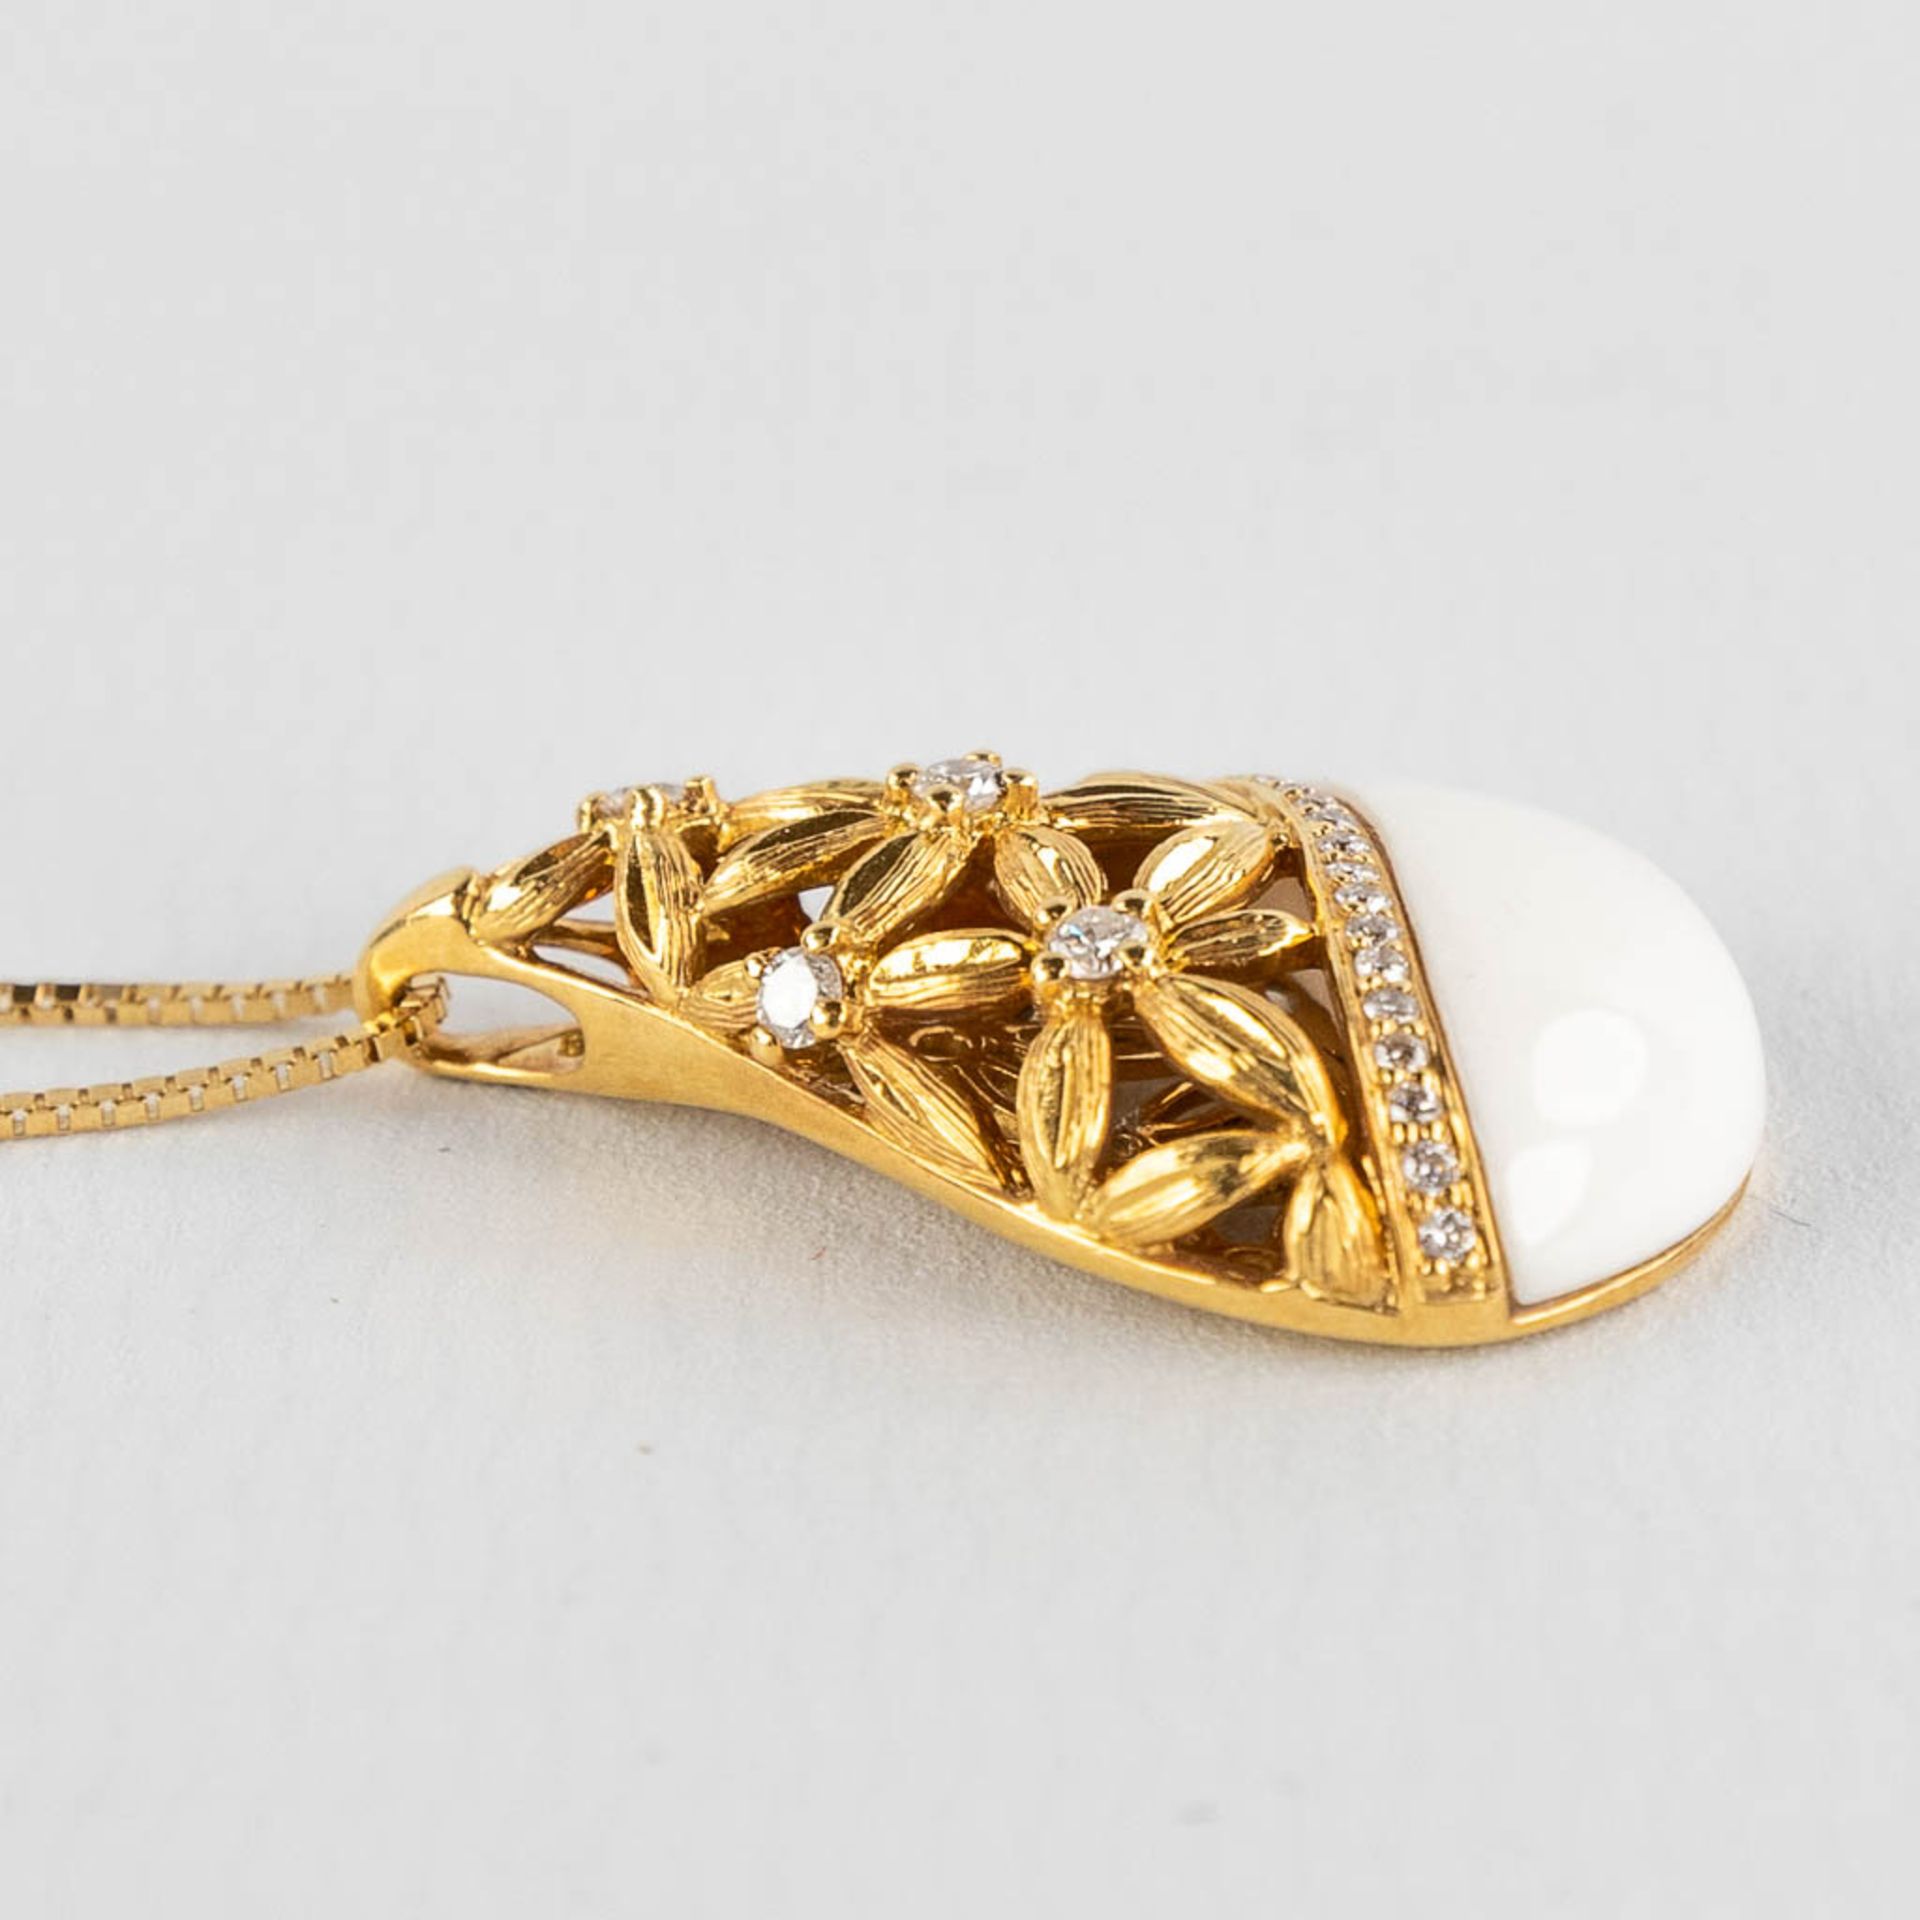 A pendant, 18kt yellow gold with brilliants, appr.,24ct, white enamel and flower decor. 6,73g. - Bild 5 aus 9